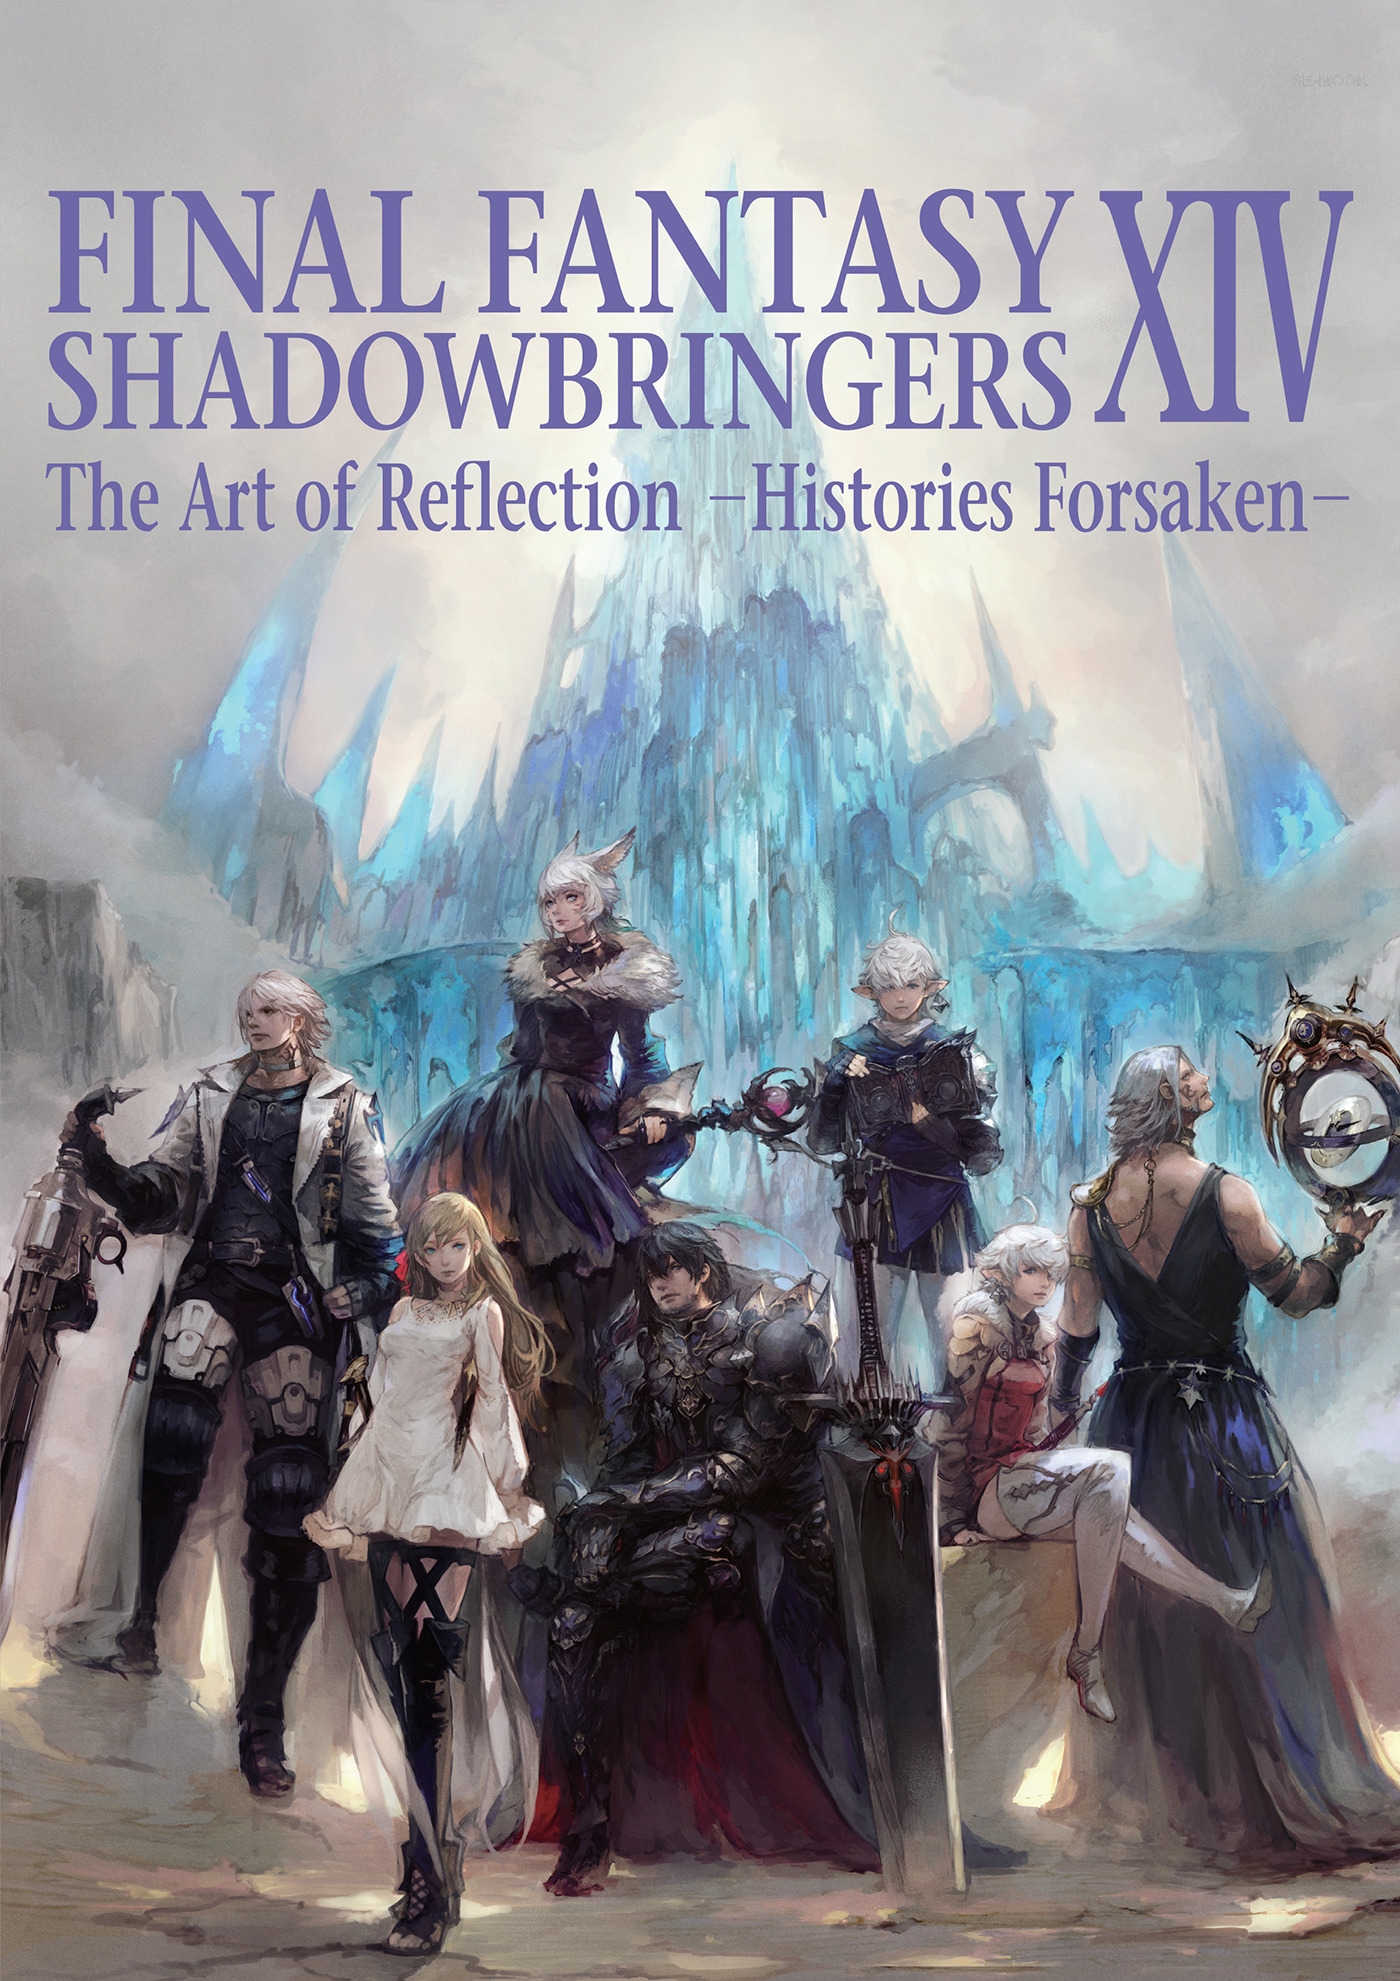 Final Fantasy Xiv Shadowbringers By Square Enix Penguin Books Australia